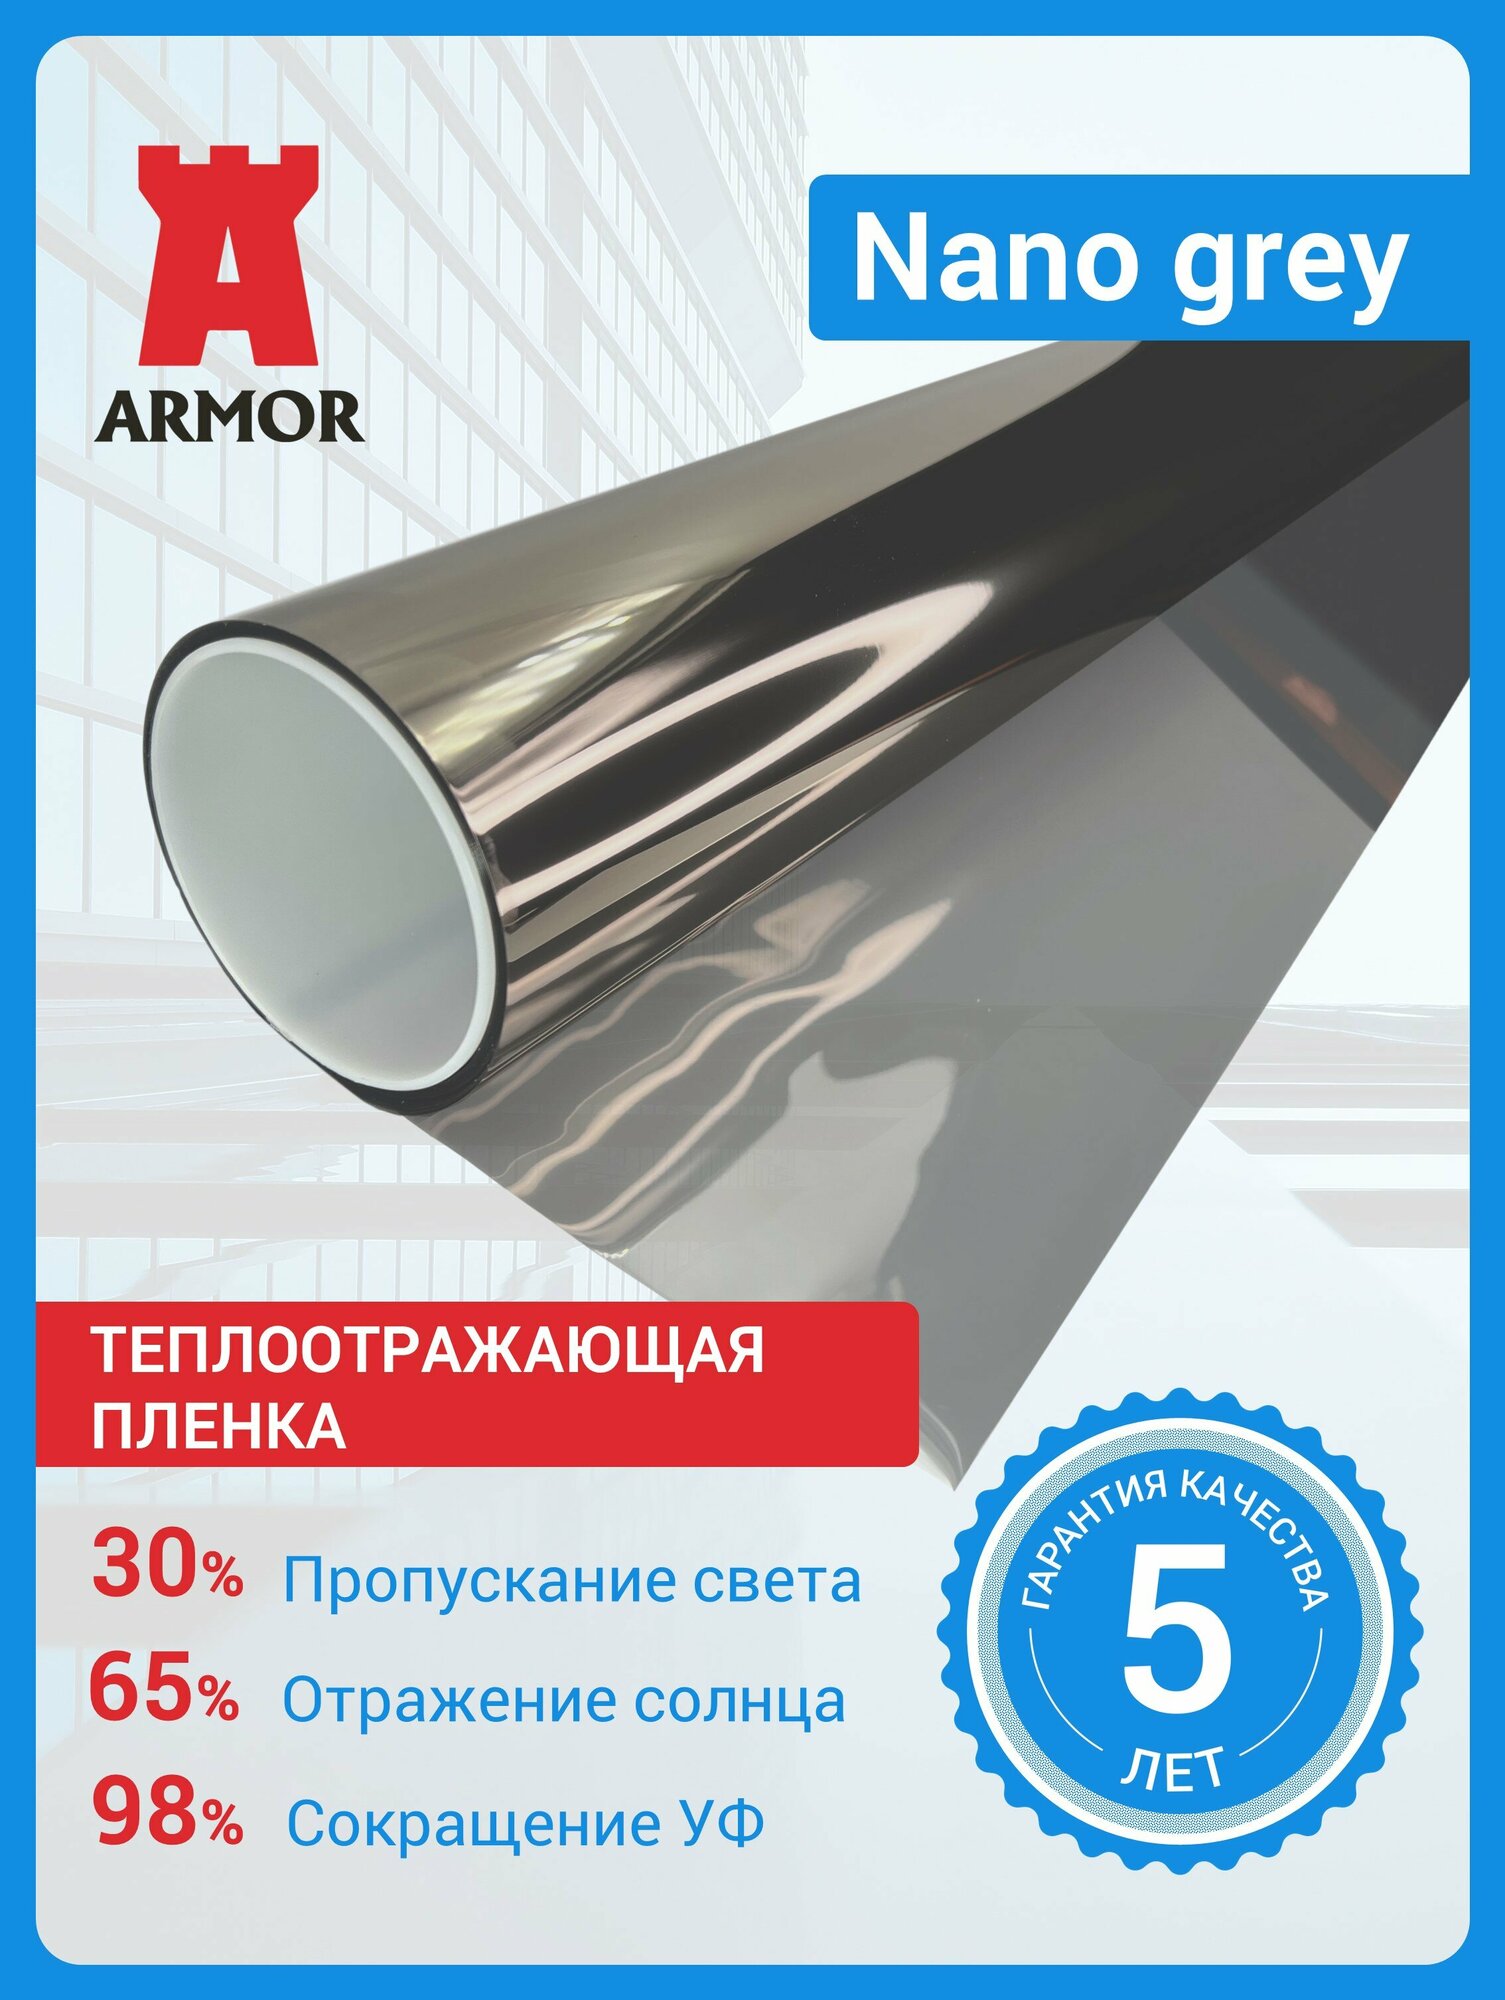 Самоклеющаяся теплоотражающая пленка для окон Nano Grey цвет - серый размер 075 м. х 05 м. (75х50 см)